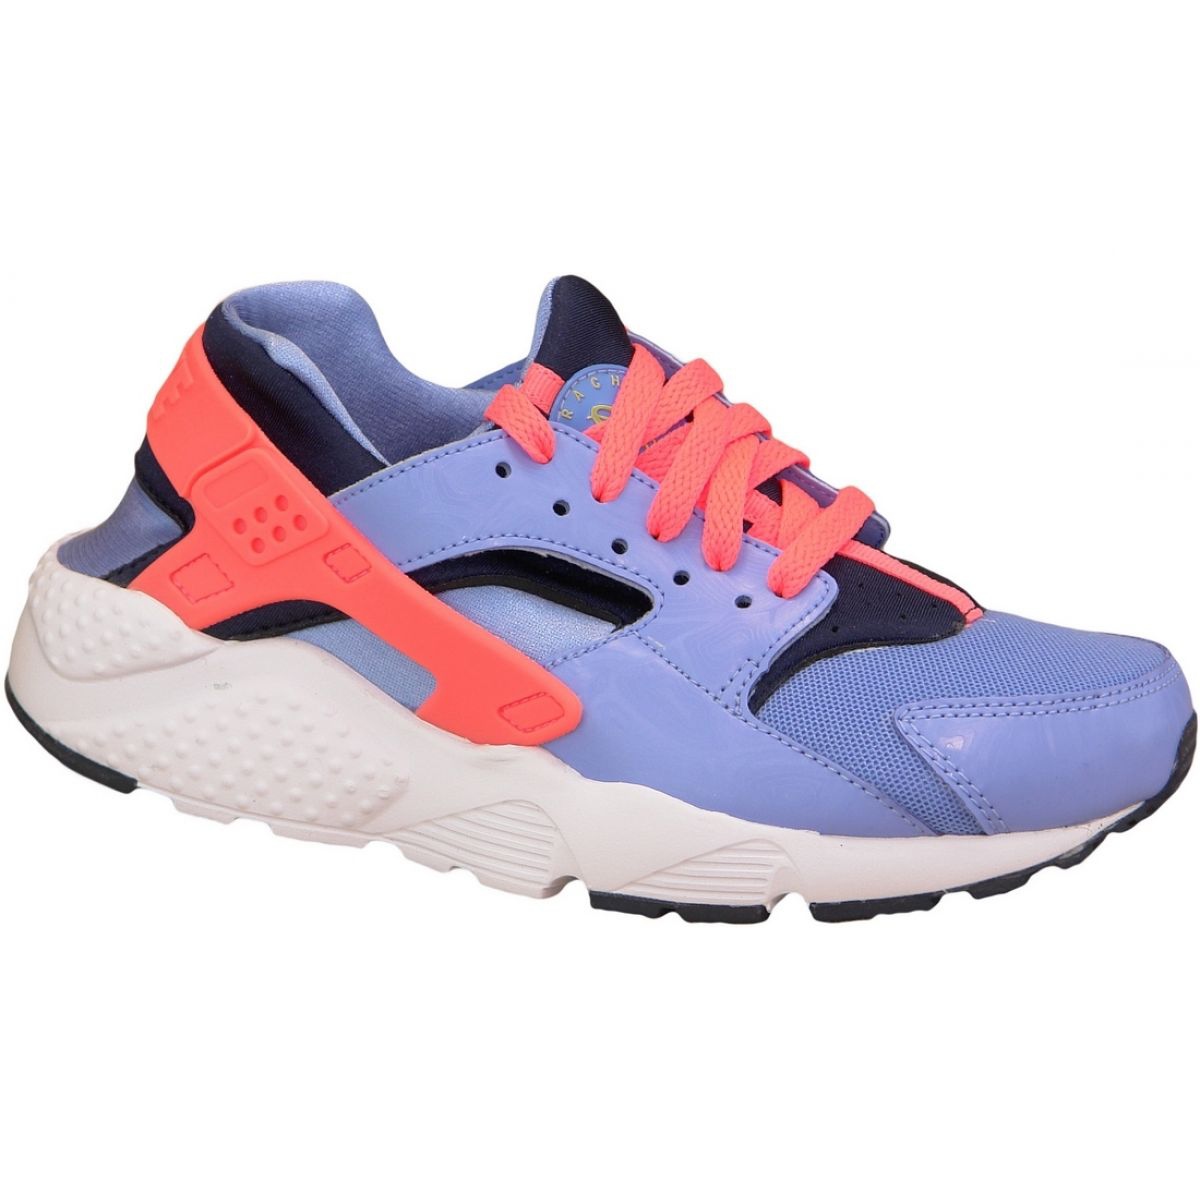 Buty Nike Huarache Run Gs Jr 654280-402 niebieskie szare